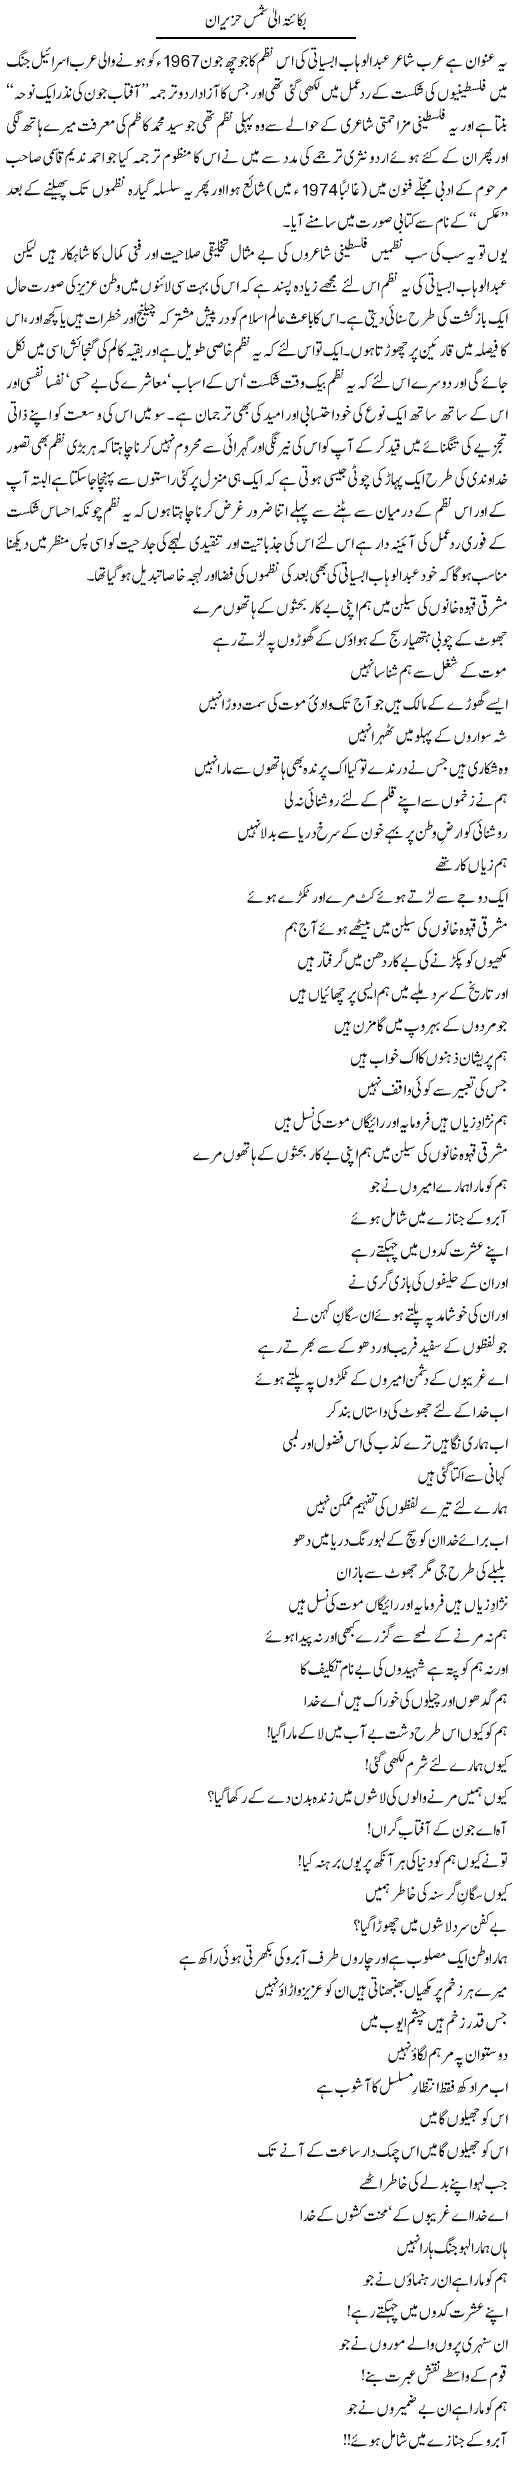 Poem On Israel Arab War Express Column Amjad Islam 9 June 2011